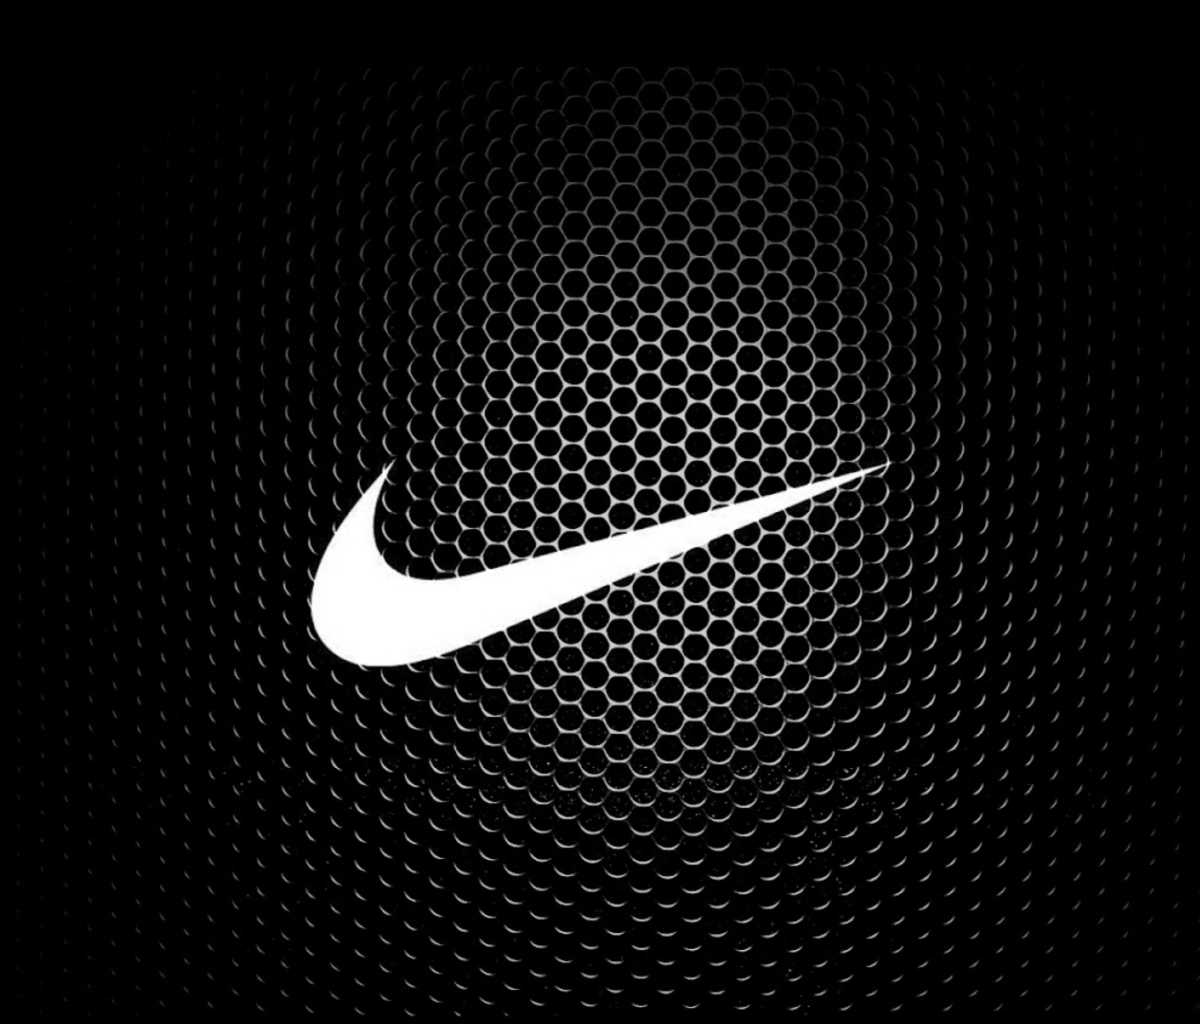 Fondo de pantalla Nike 1200x1024